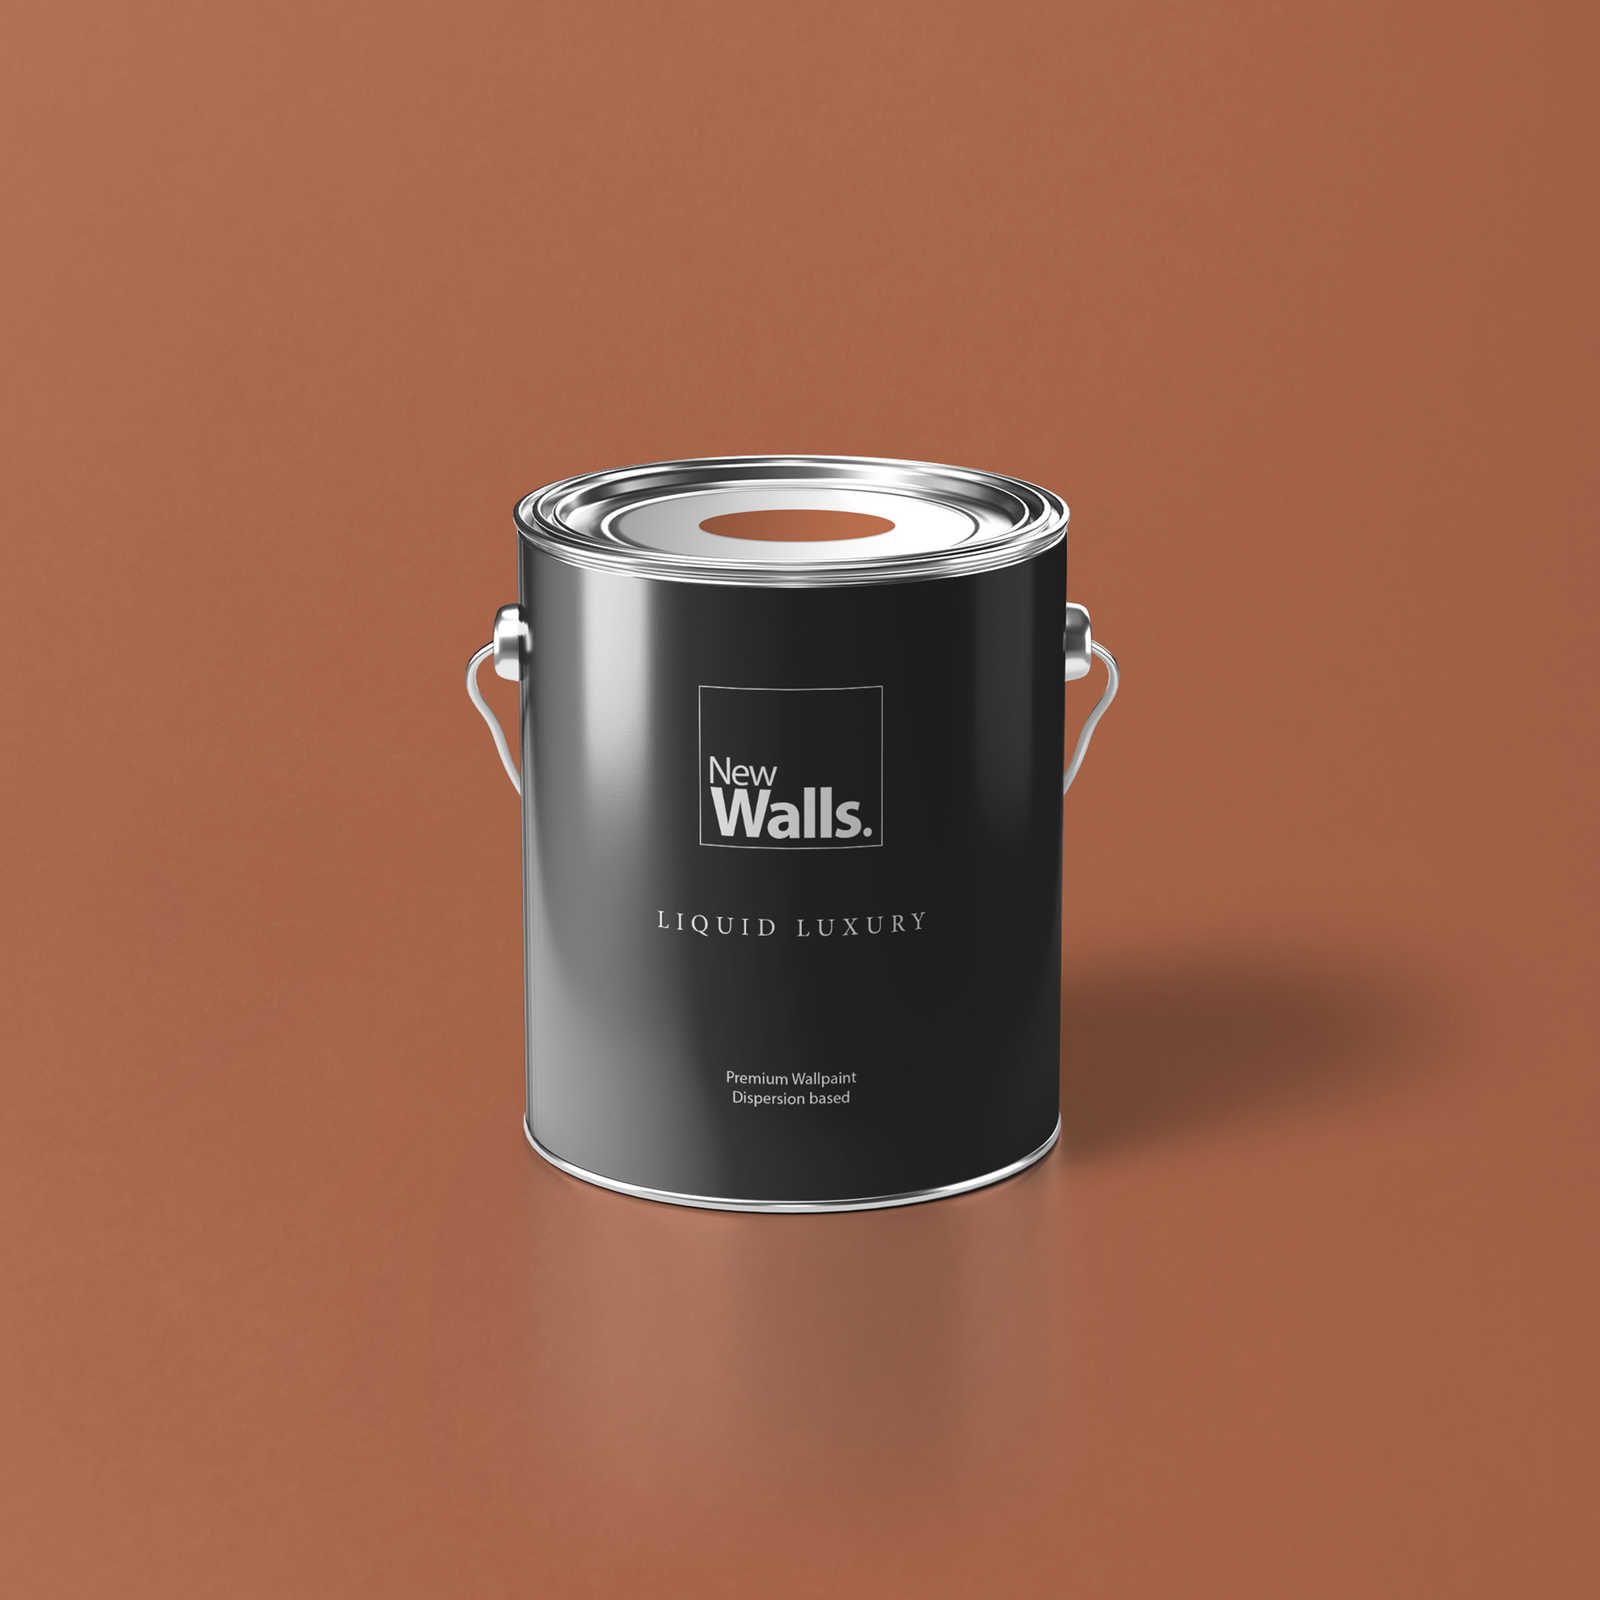 Premium Wall Paint Stimulating Copper »Pretty Peach« NW905 – 2.5 litre
